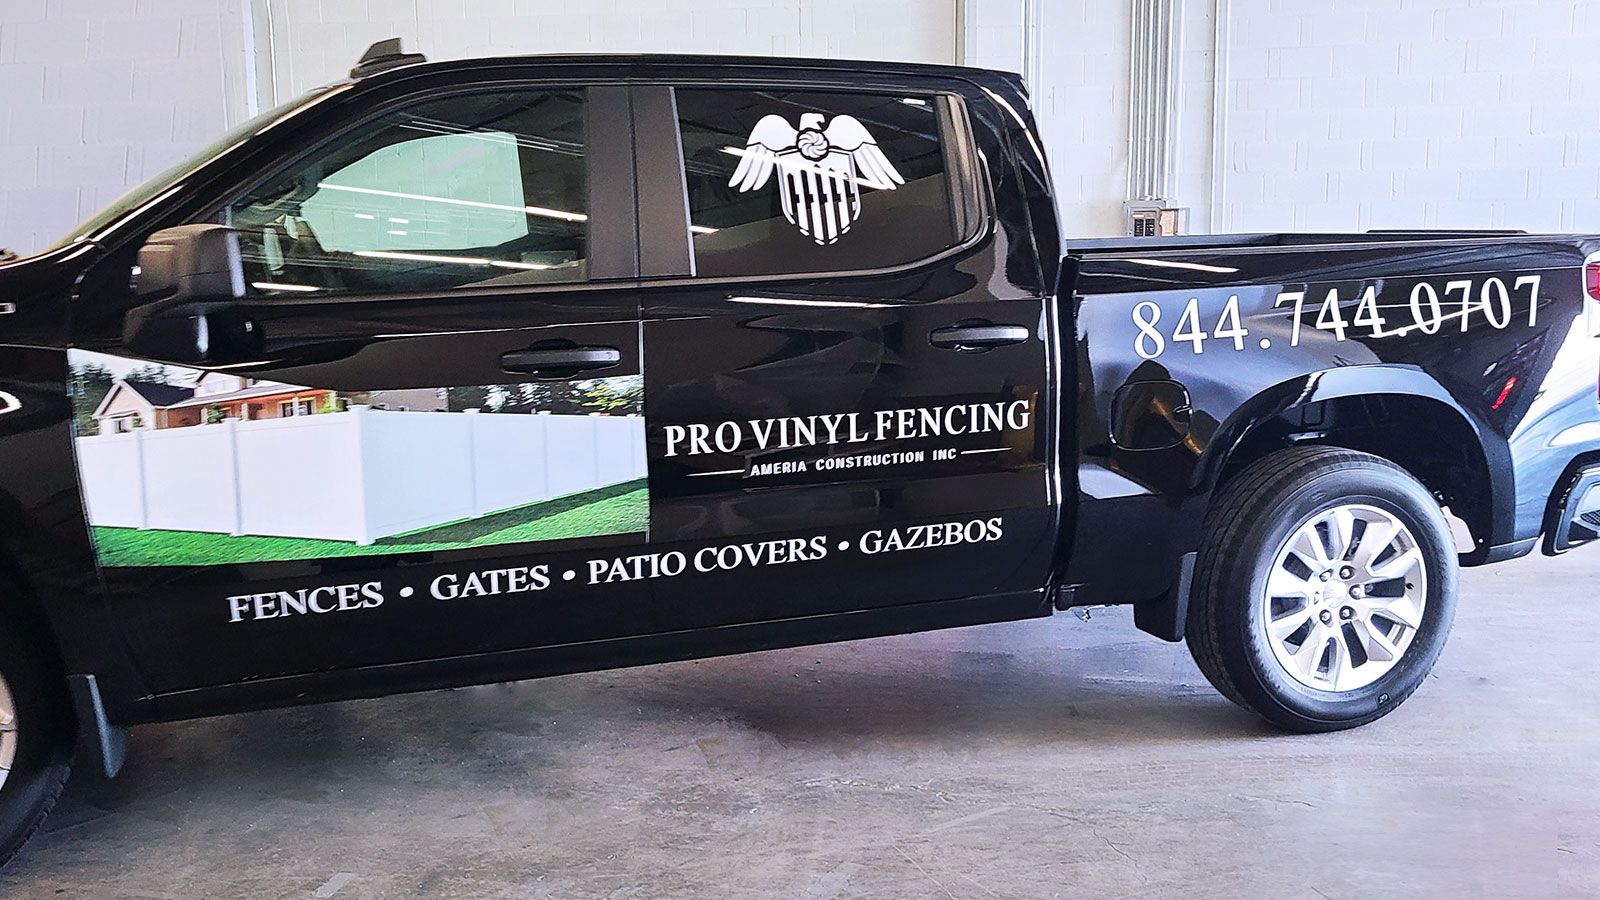 Provinyl fencing car decal